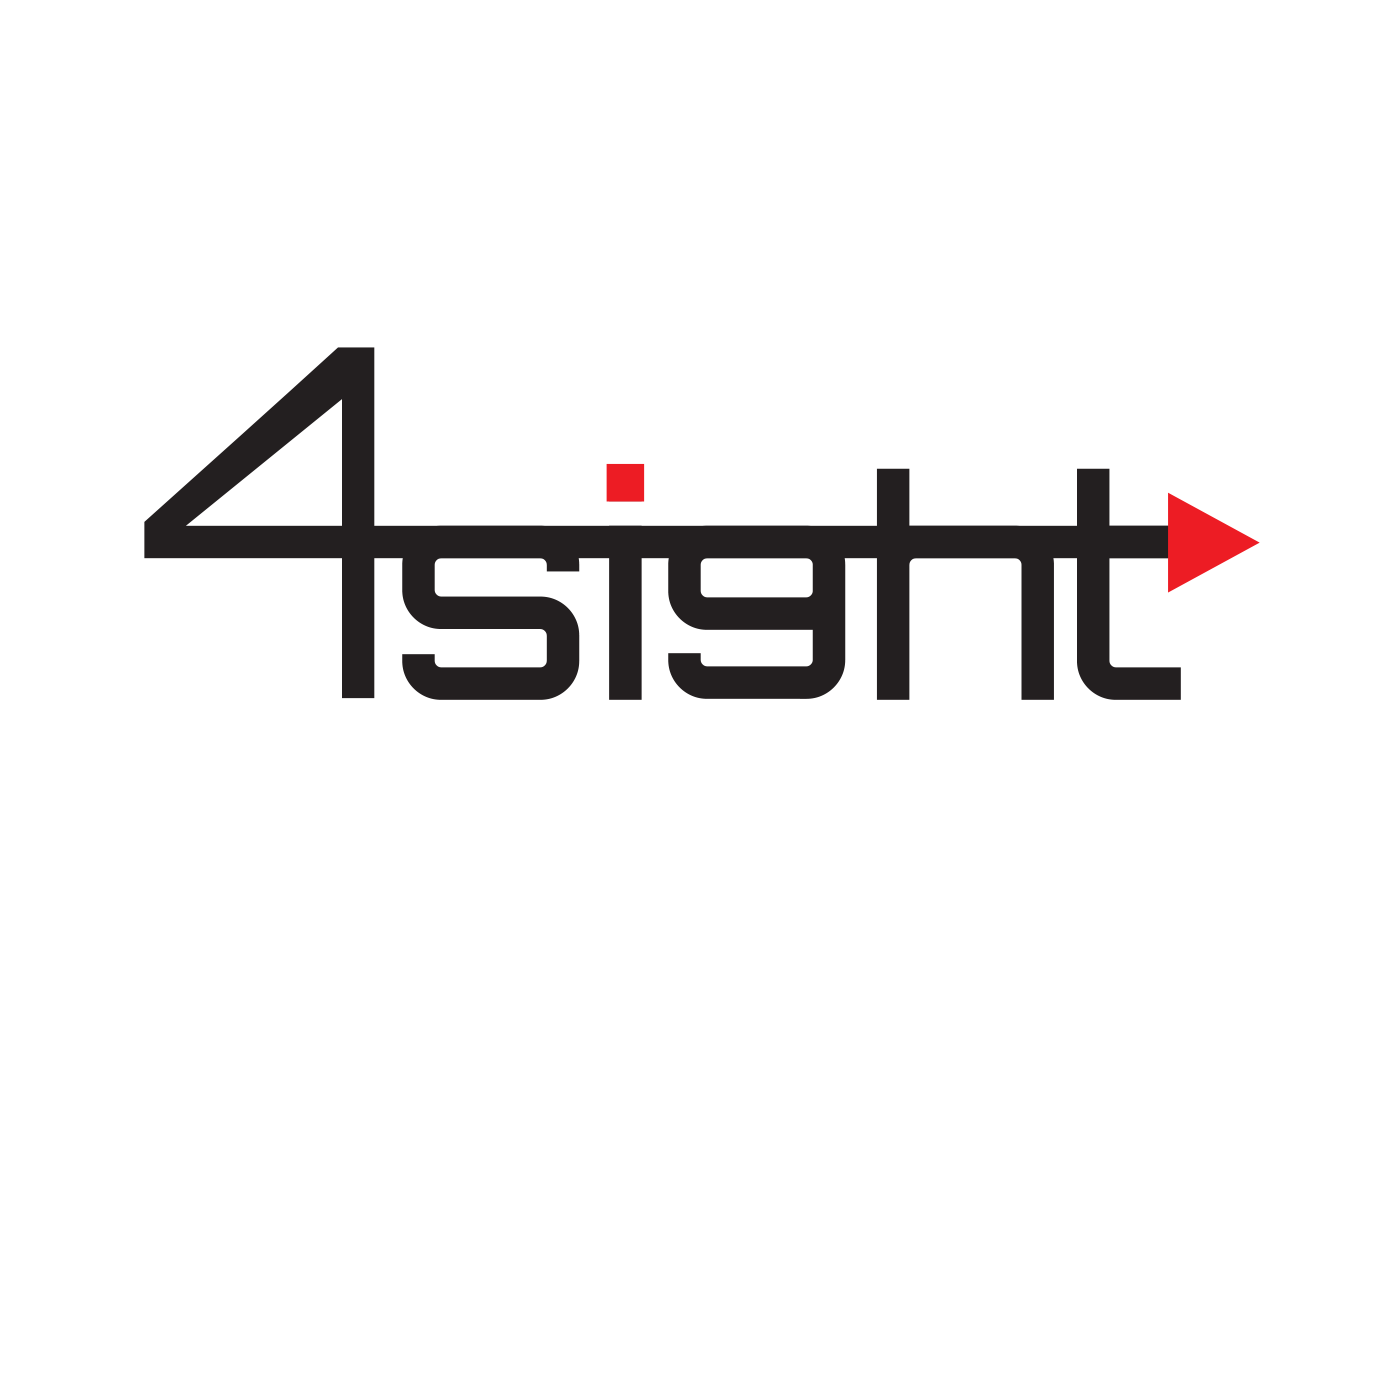 4Sight Model Podcast RSS